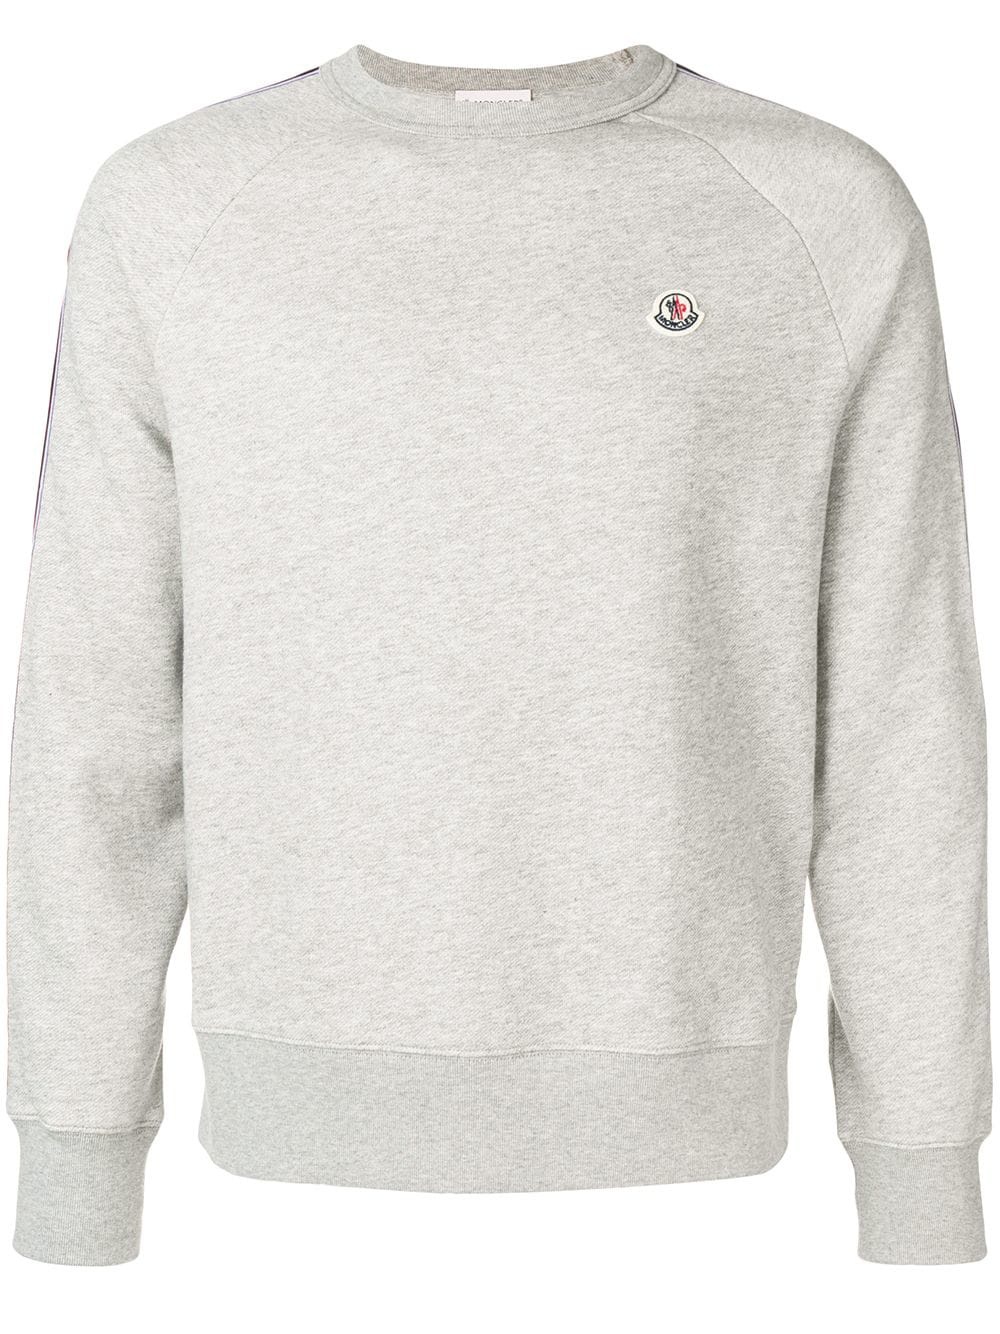 moncler grey sweater